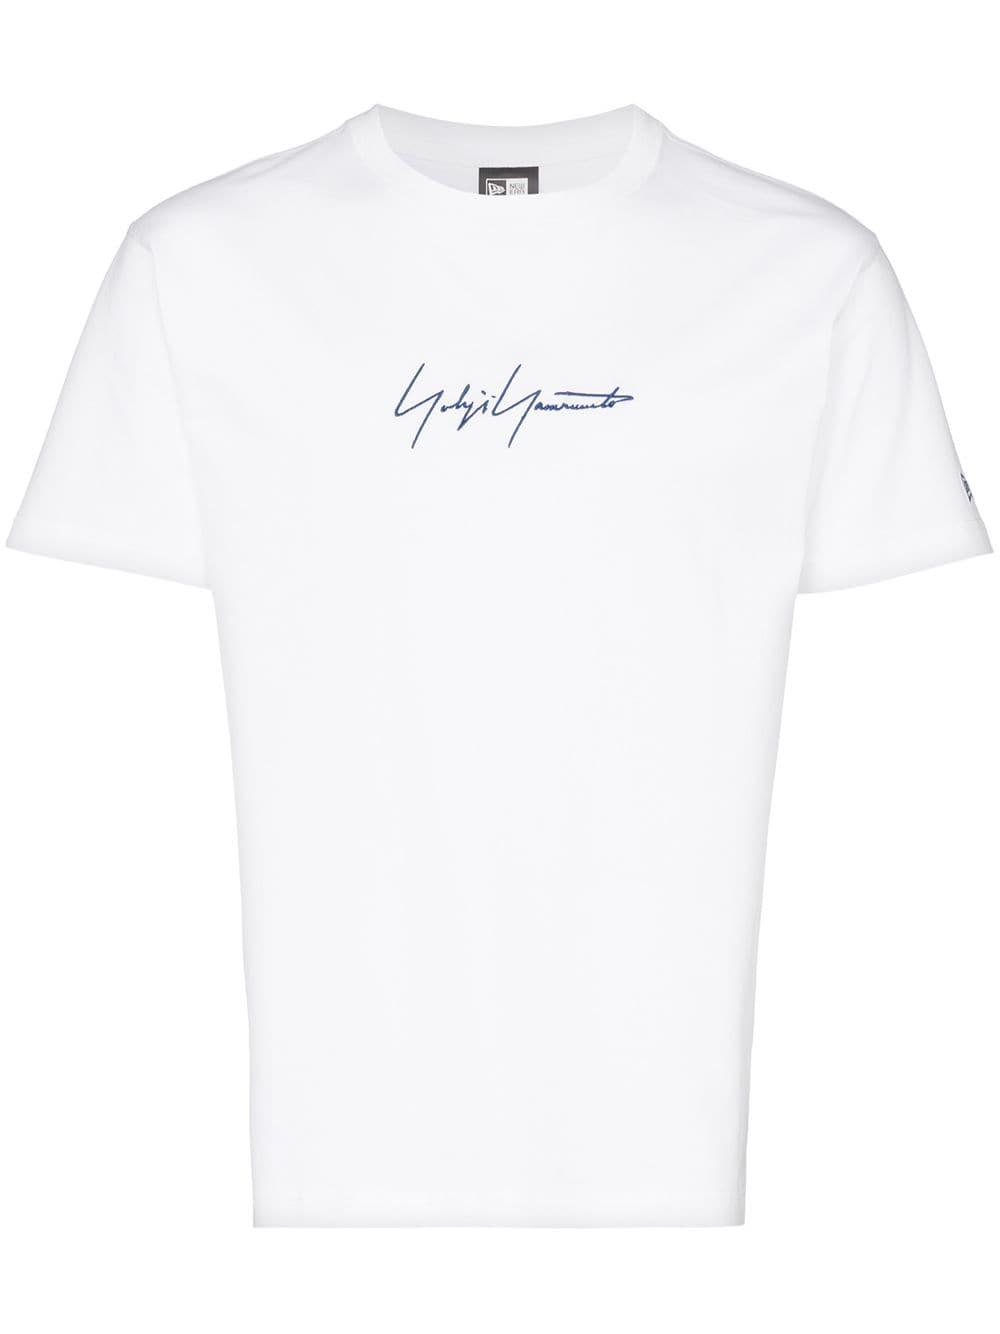 Yohji Yamamoto Signature Logo T-shirt in White for Men - Save 59% - Lyst